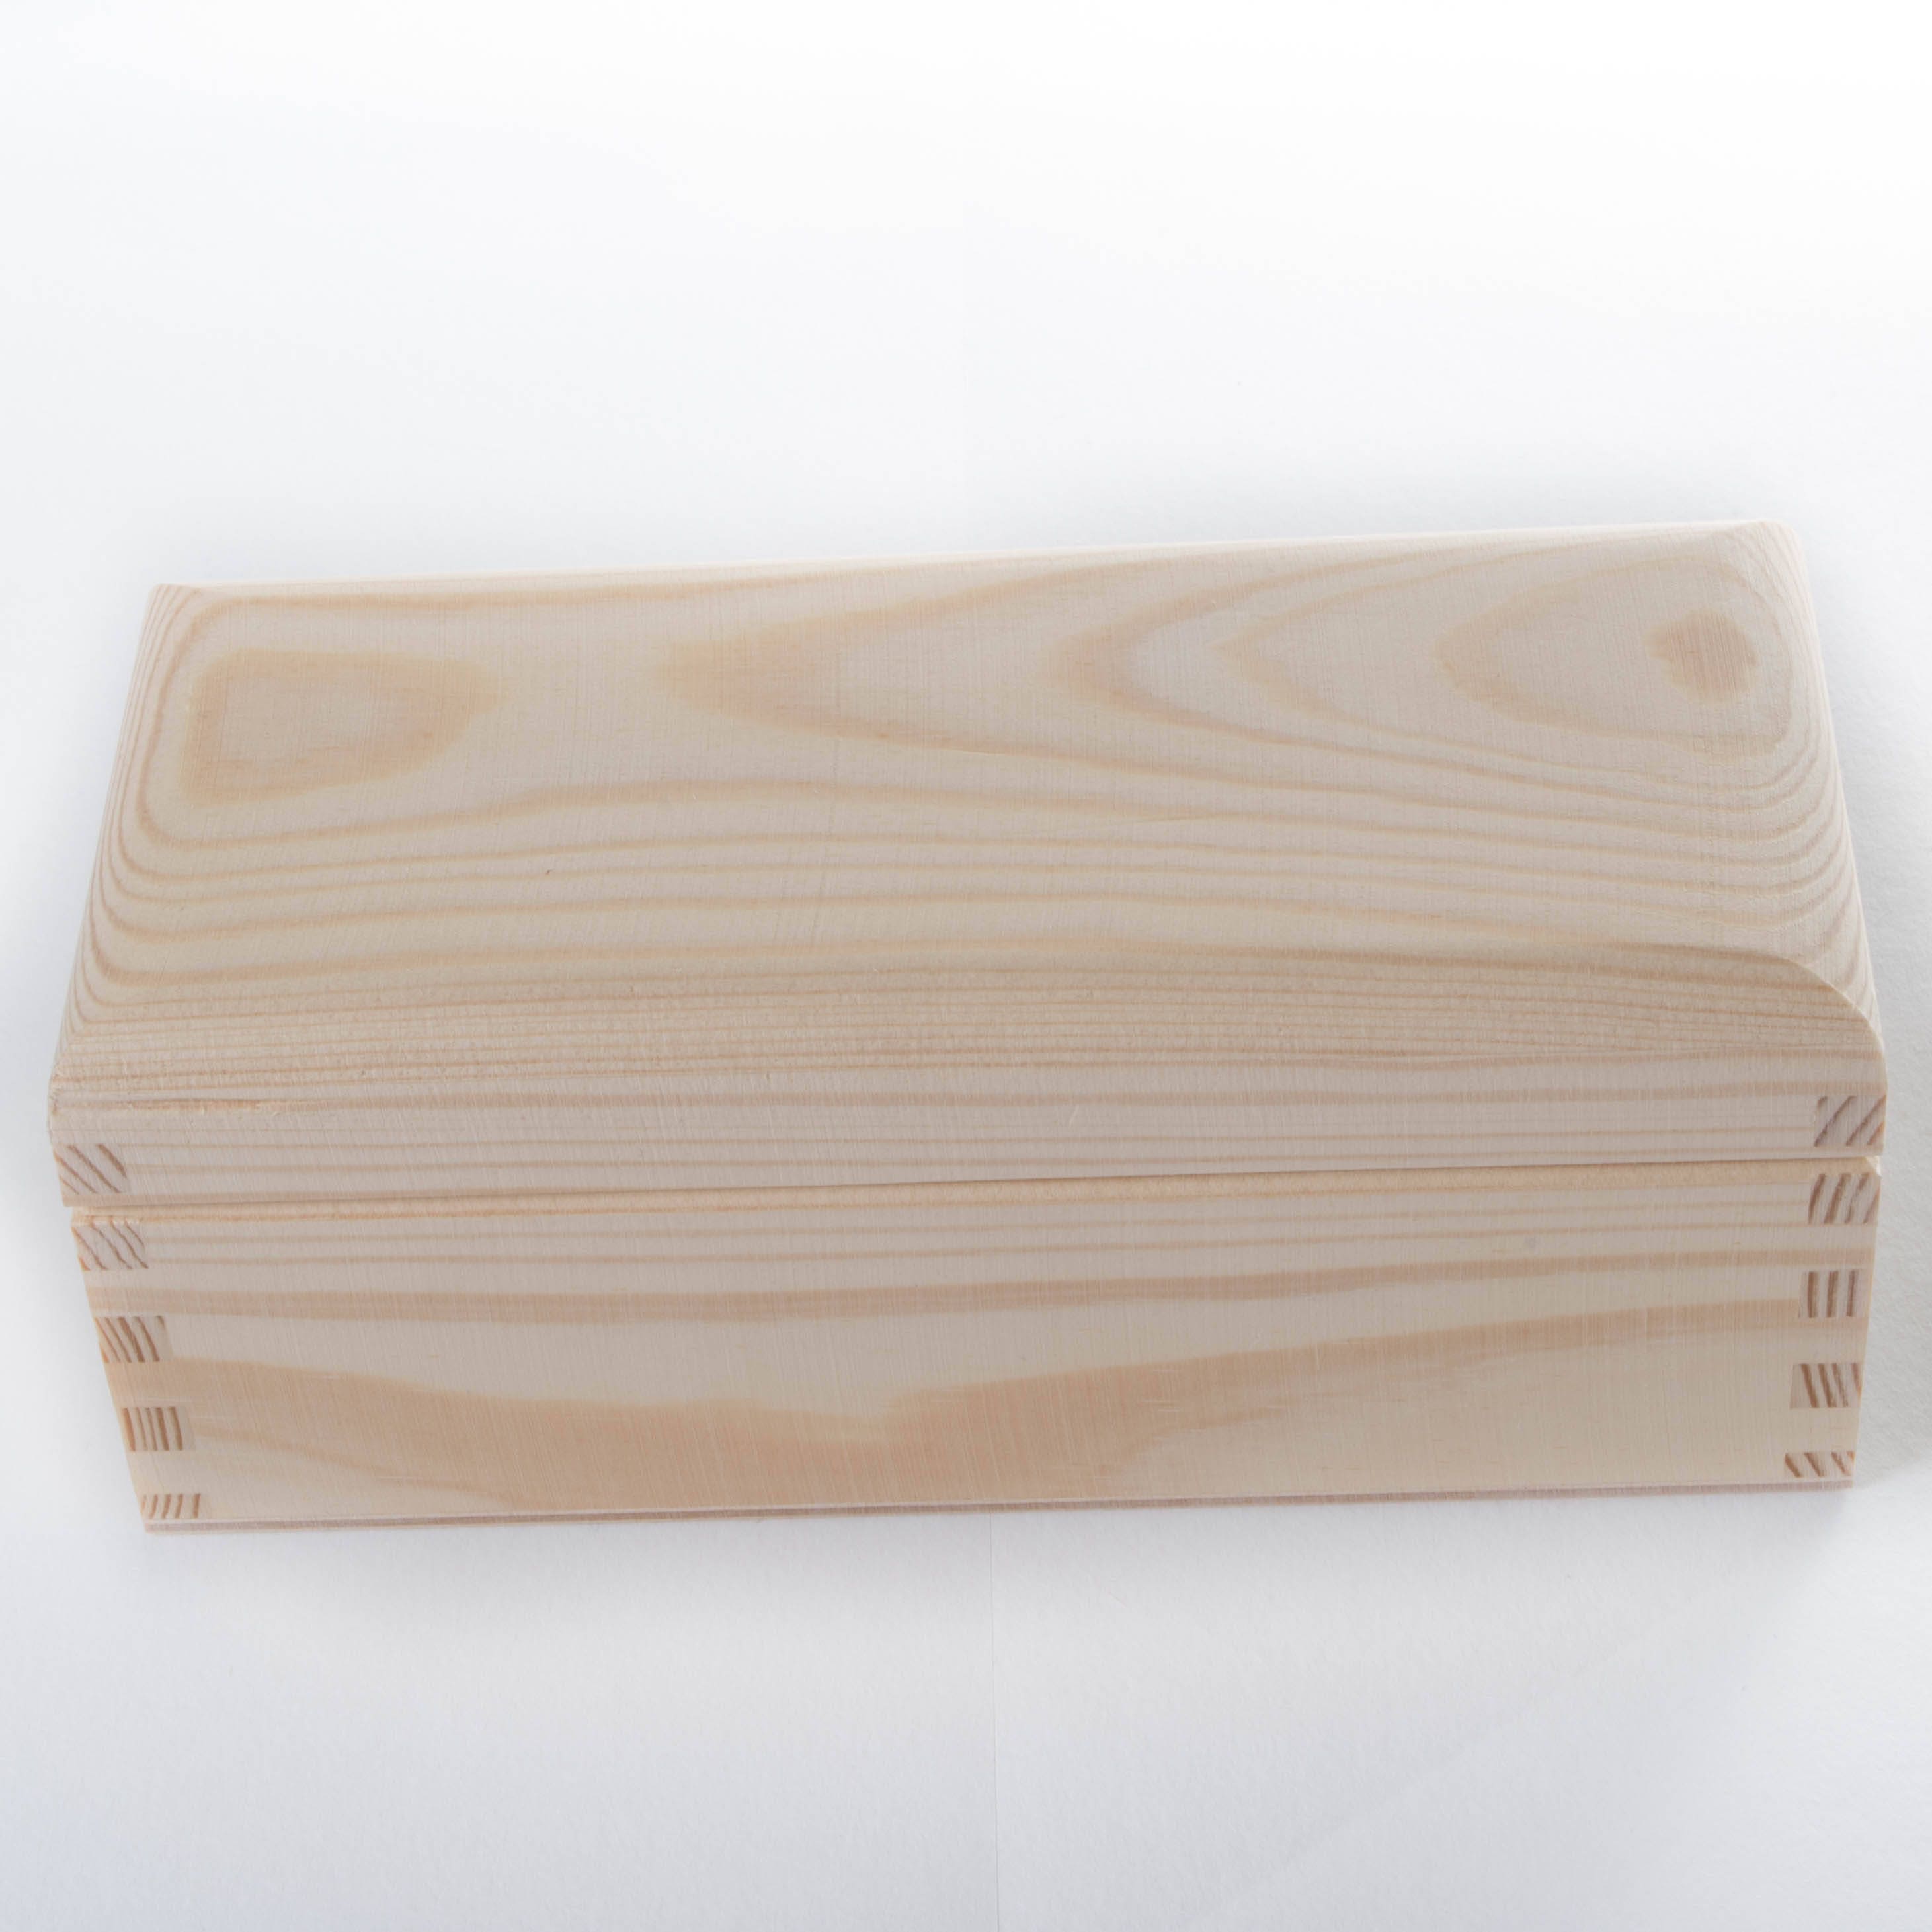 1x Medium Book Trinket Wooden Storage Box Decoupage Plain Chest KFR MEDIUM 